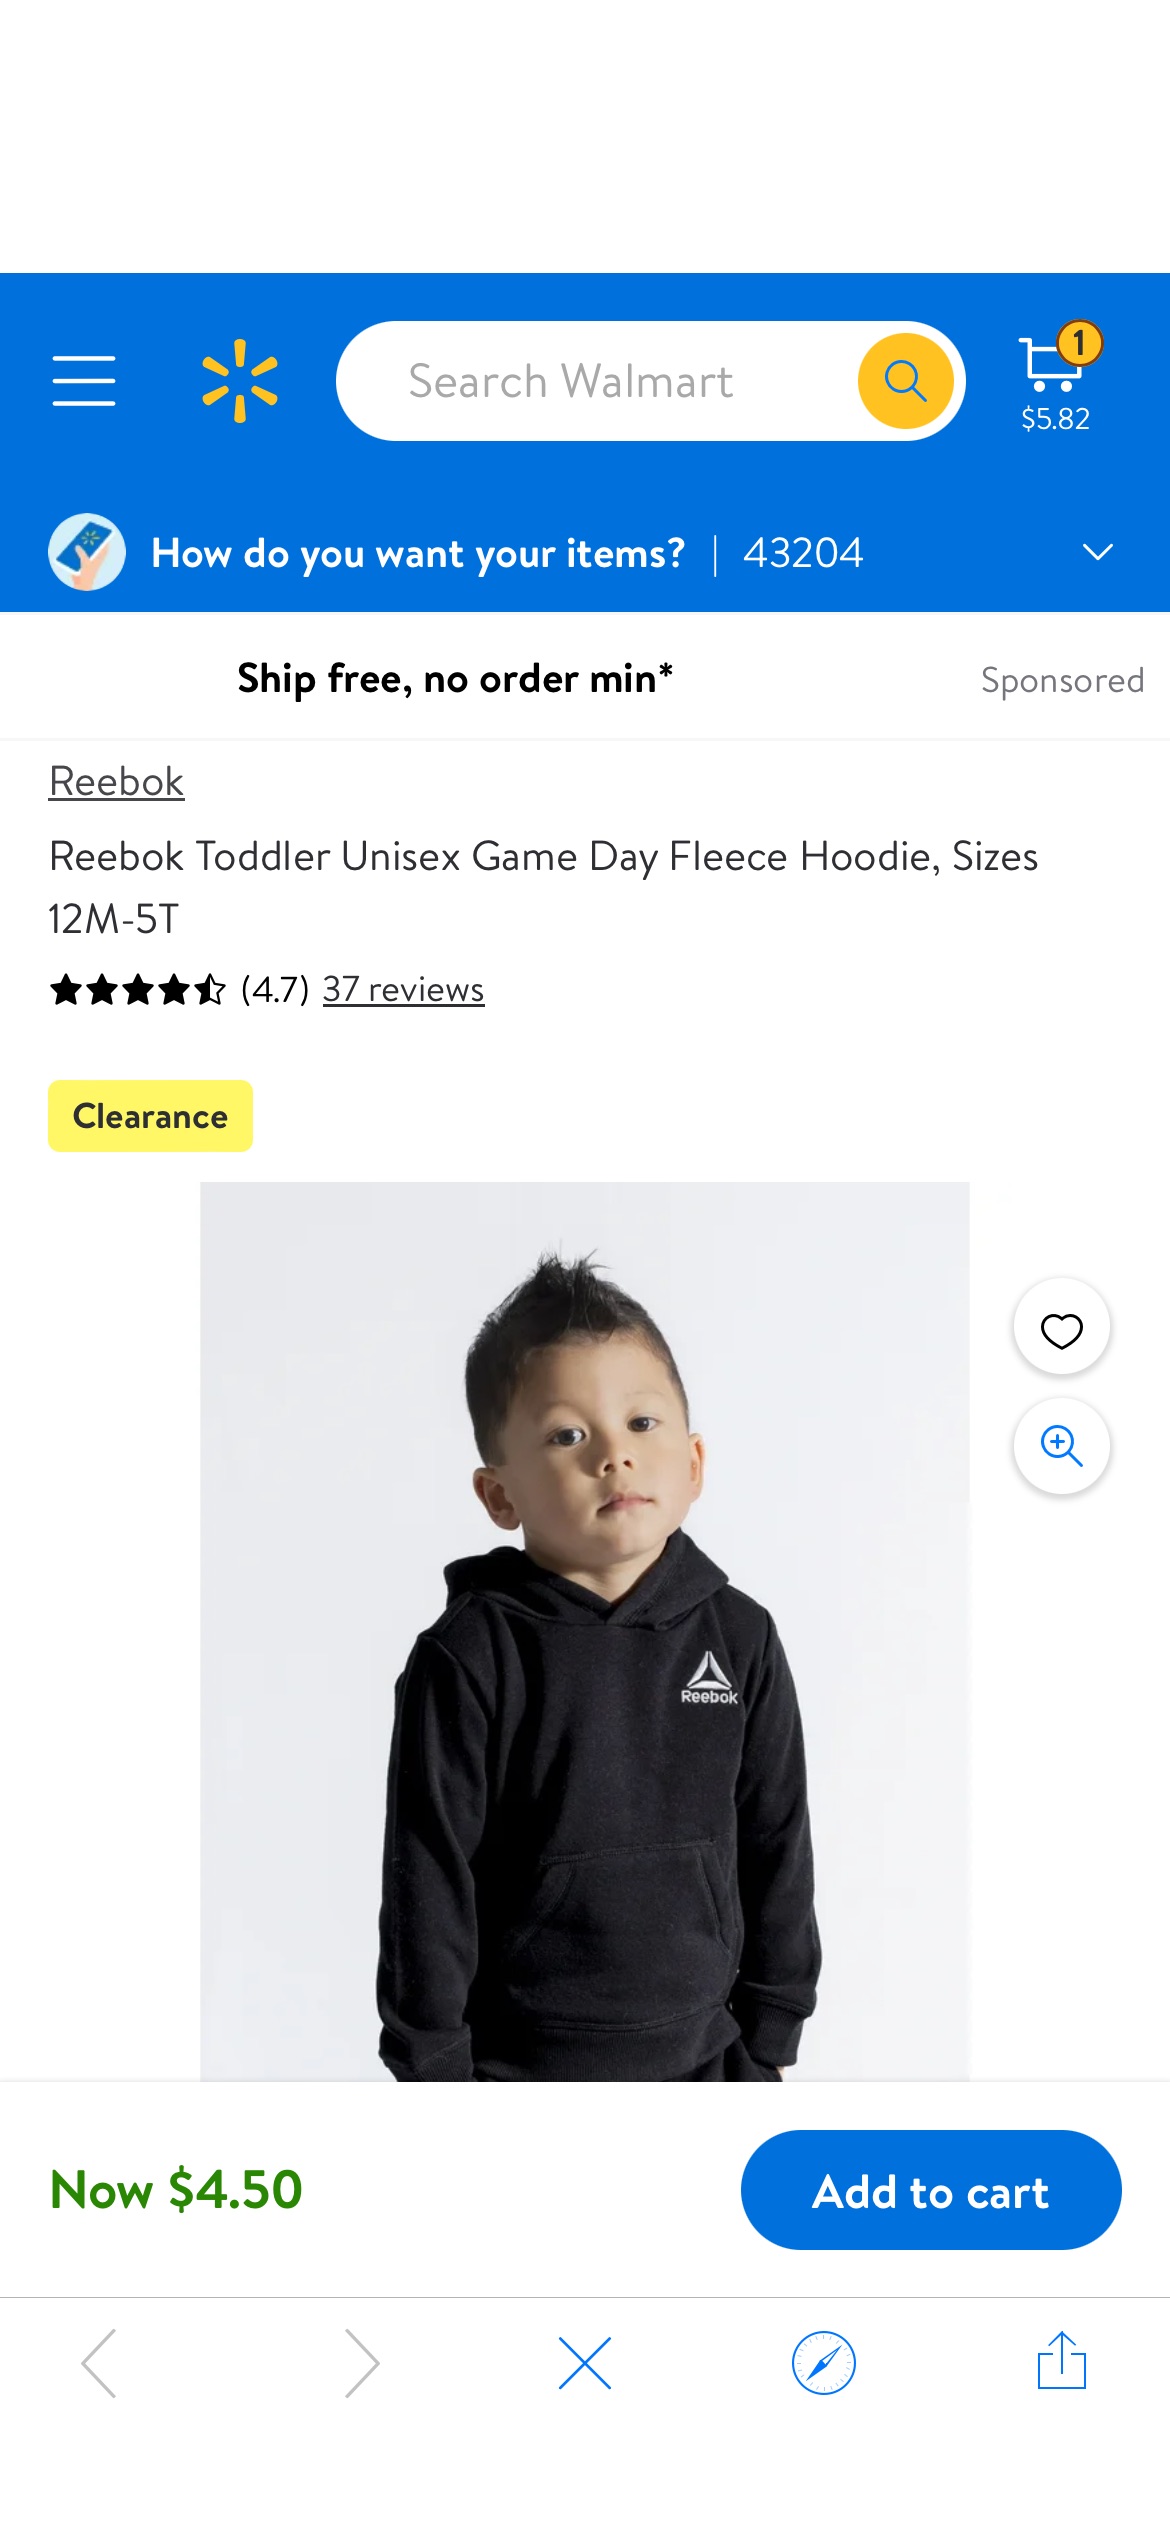 Reebok Toddler Unisex Game Day Fleece Hoodie, Sizes 12M-5T - Walmart.com 锐步 上衣